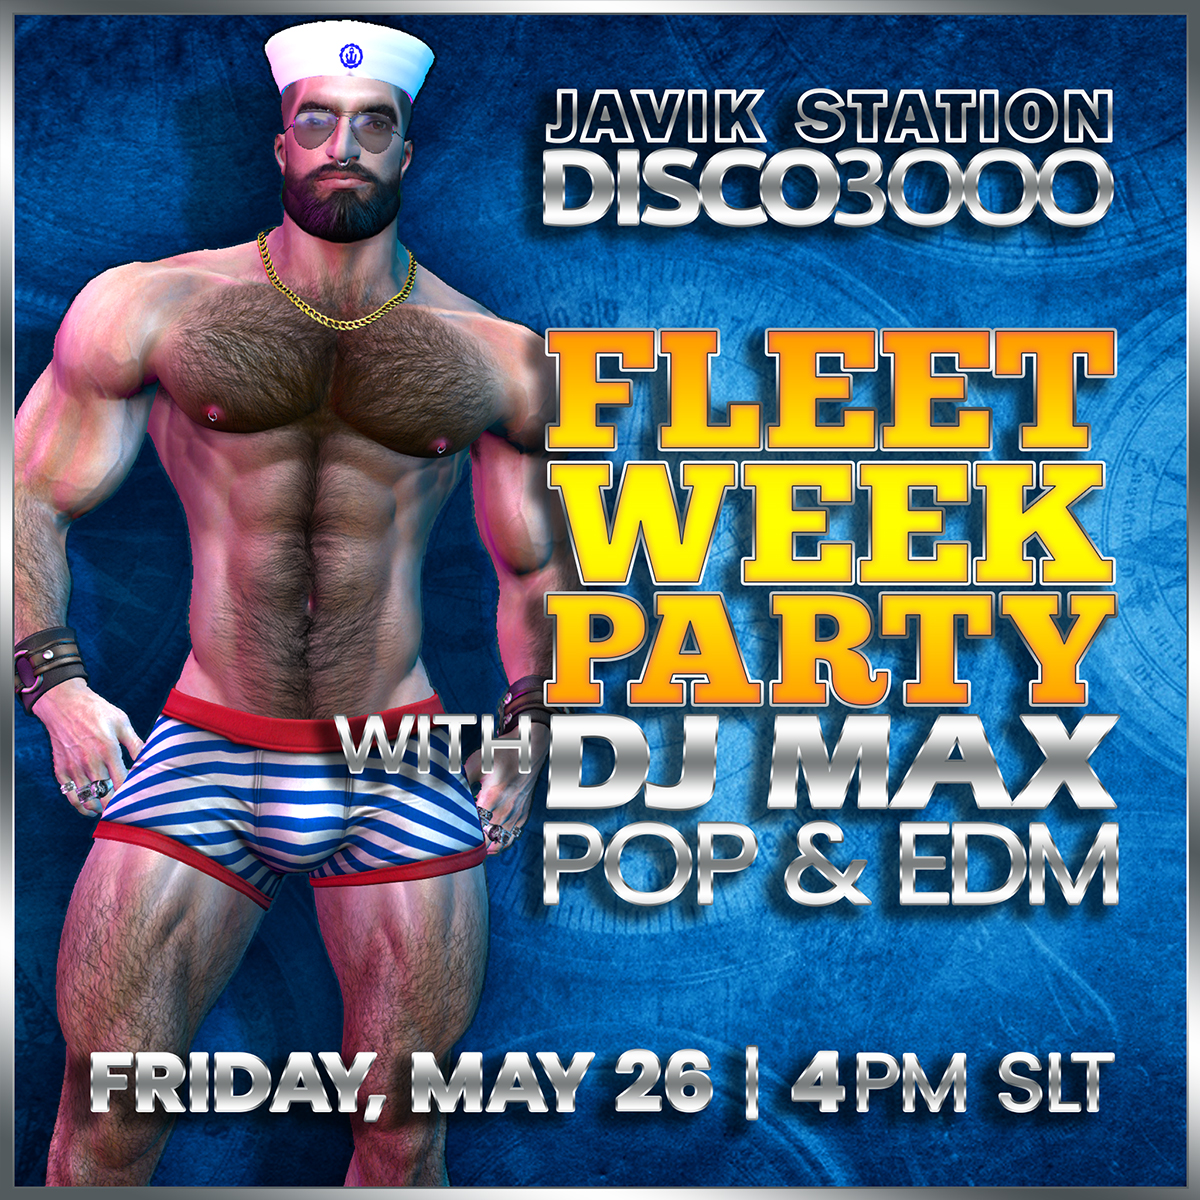 DISCO 3000 FLEET WEEK PARTY with DJ MAX!